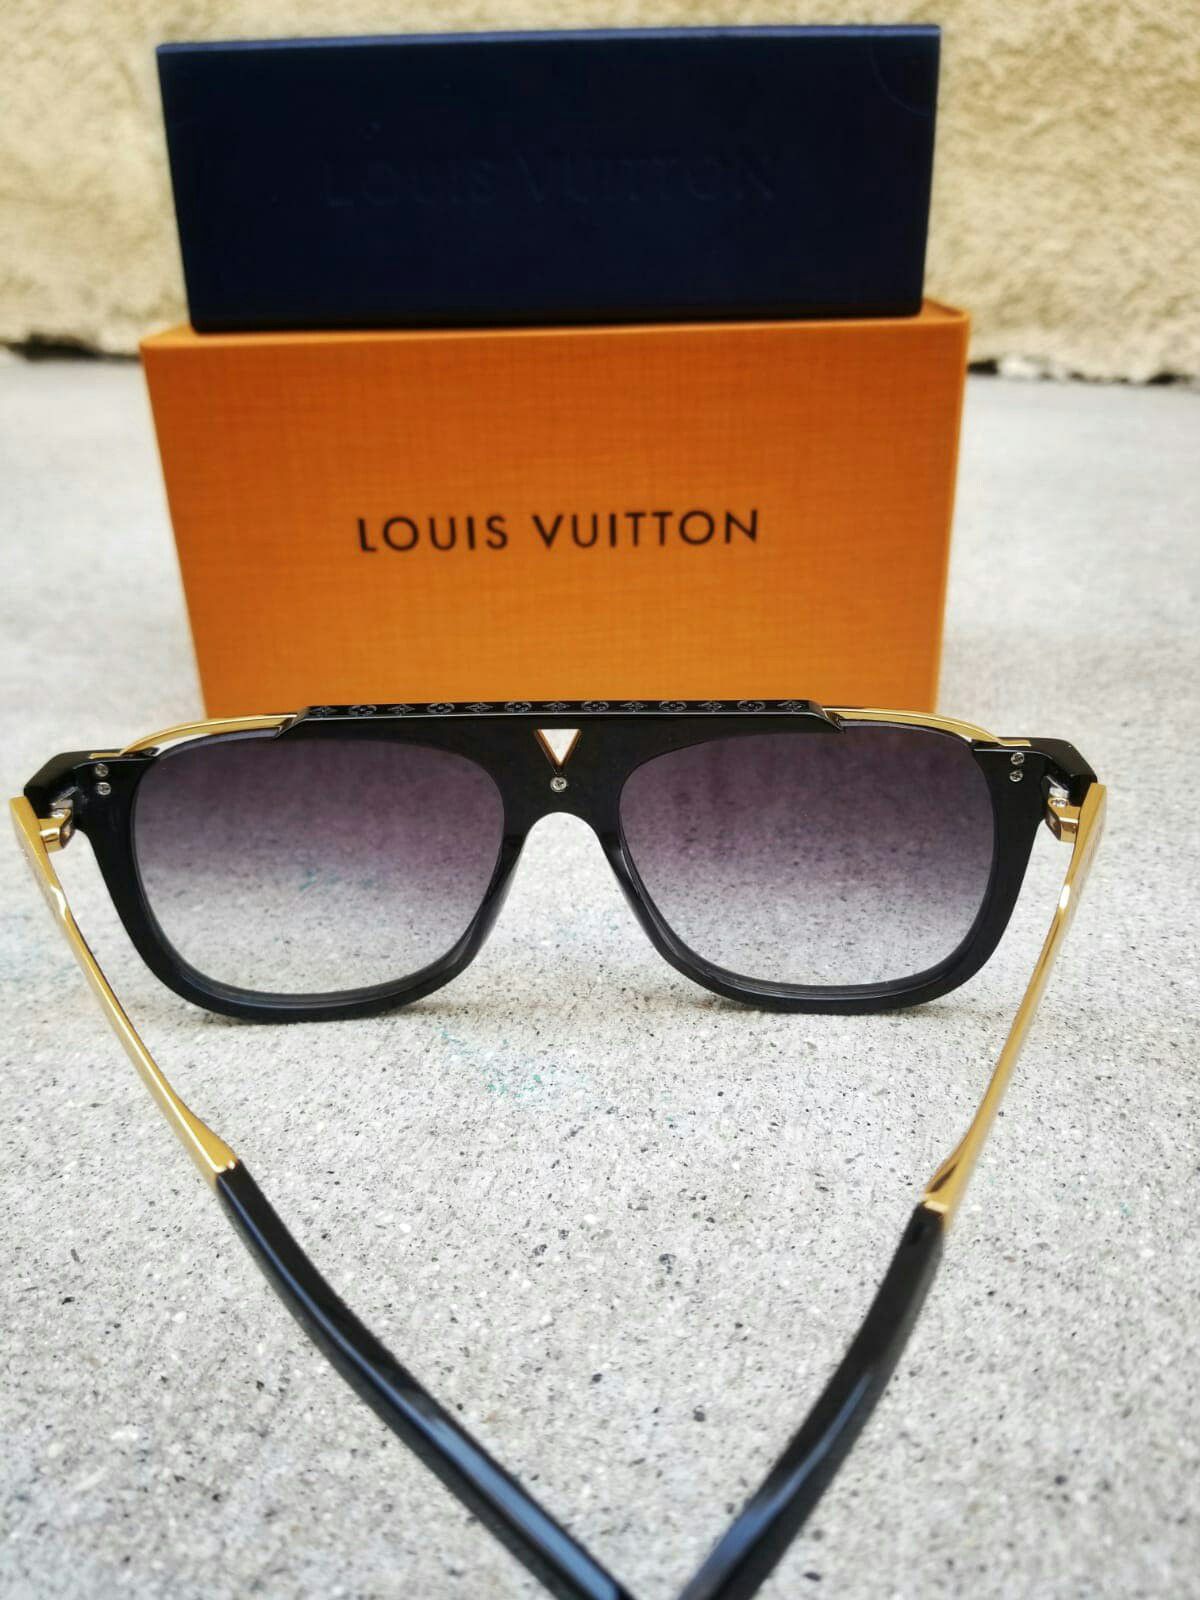 Louis Vuitton Mascot Designer Sunglasses for Sale in Los Angeles